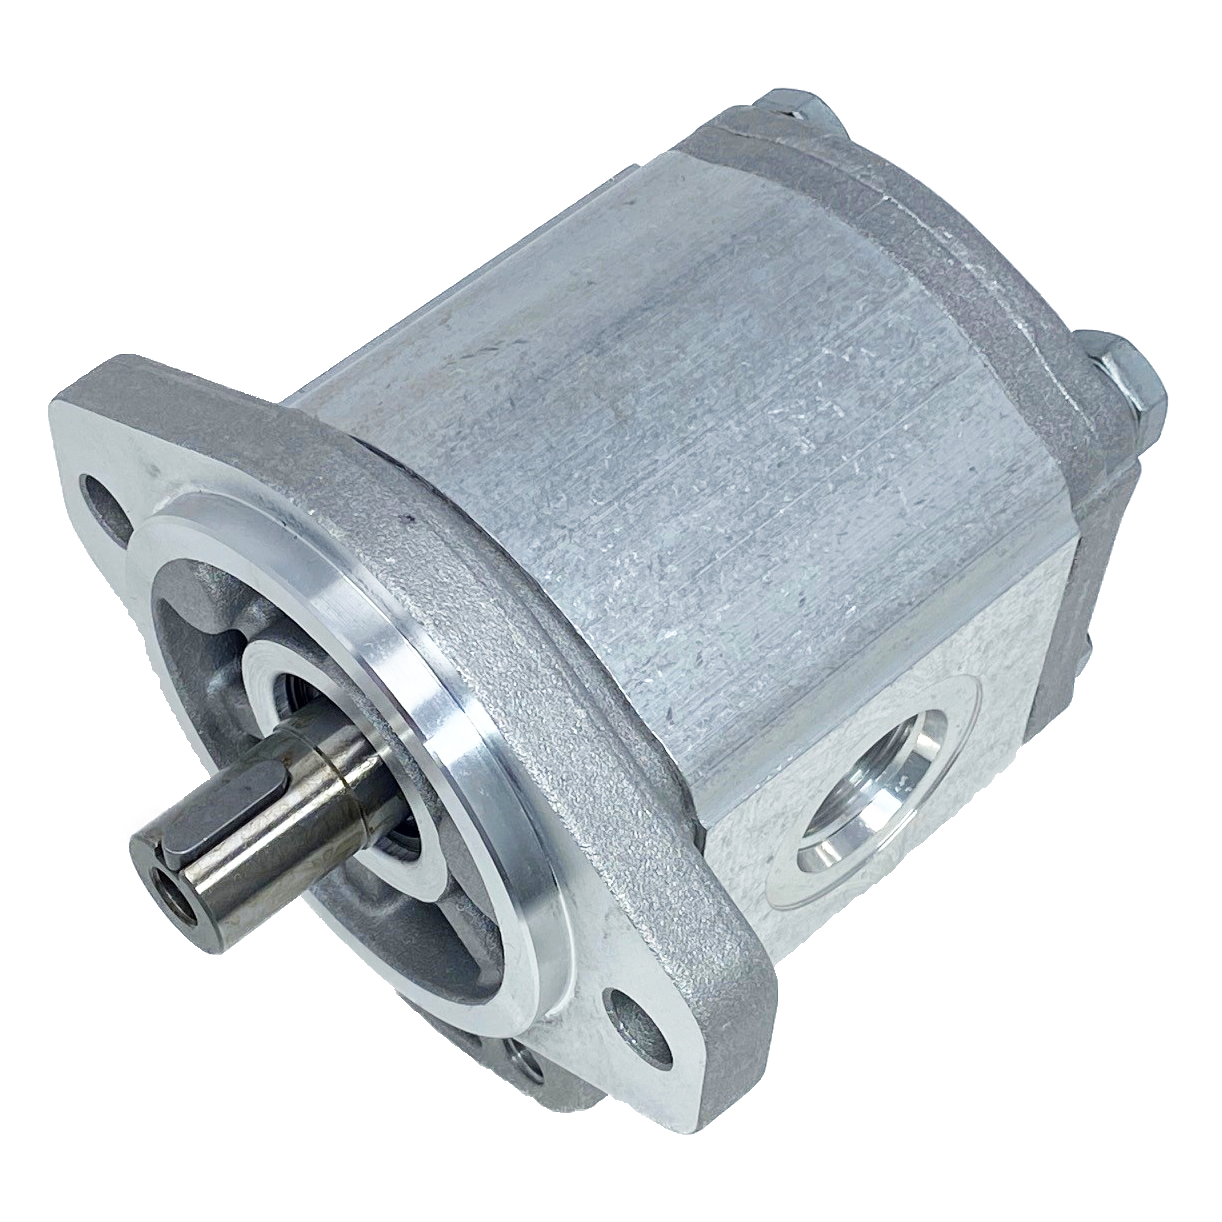 PLM20.20B0-50S1-LOC/OD-N-EL : Casappa Polaris Gear Motor, 21.14cc, 2900psi Rated, 3000RPM, Reversible Interior Drain, 3/4" Bore x 3/16" Key Shaft, SAE A 2-Bolt Flange, 0.625 (5/8") #10 SAE Inlet, 0.75 (3/4") #12 SAE Outlet, Aluminum Body & Flange